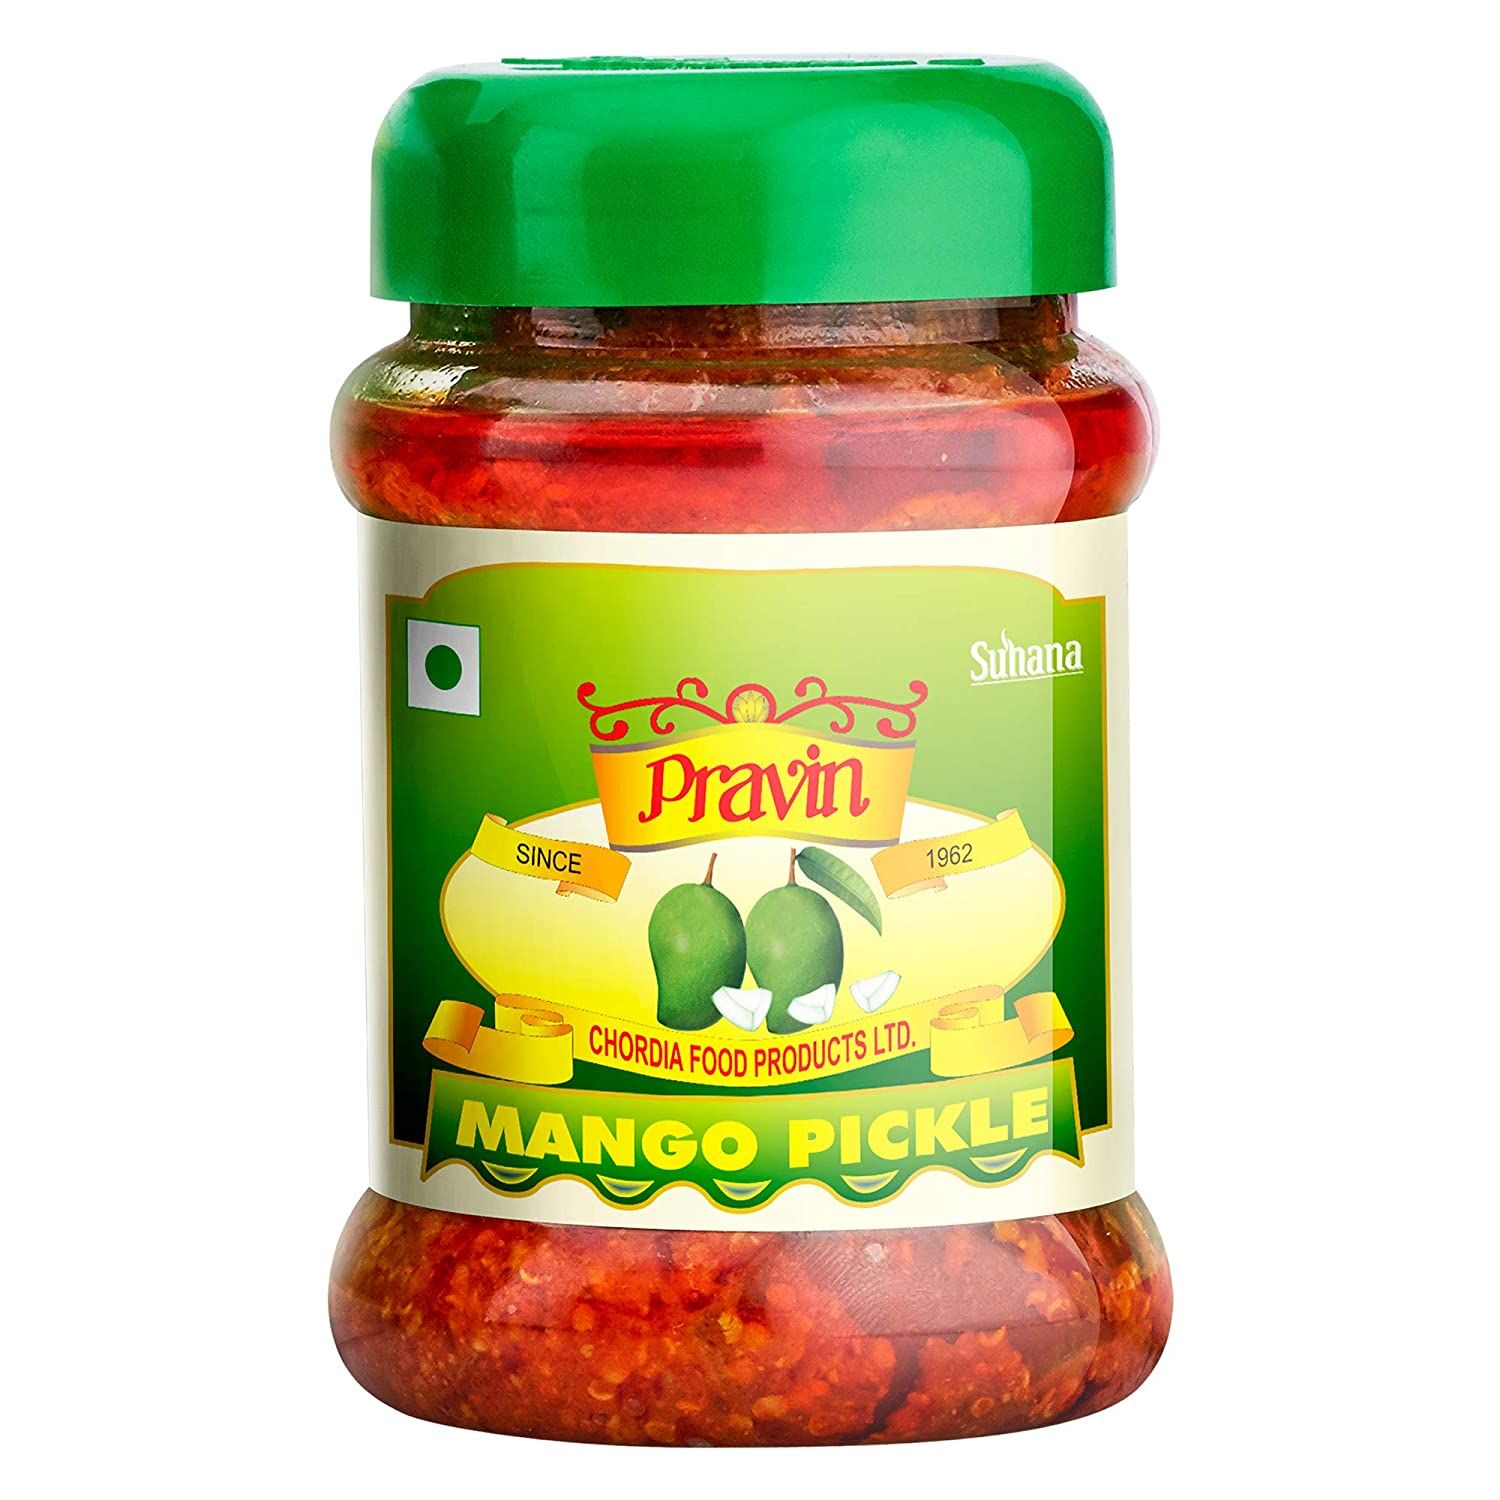 Pravin Mango Pickle Image